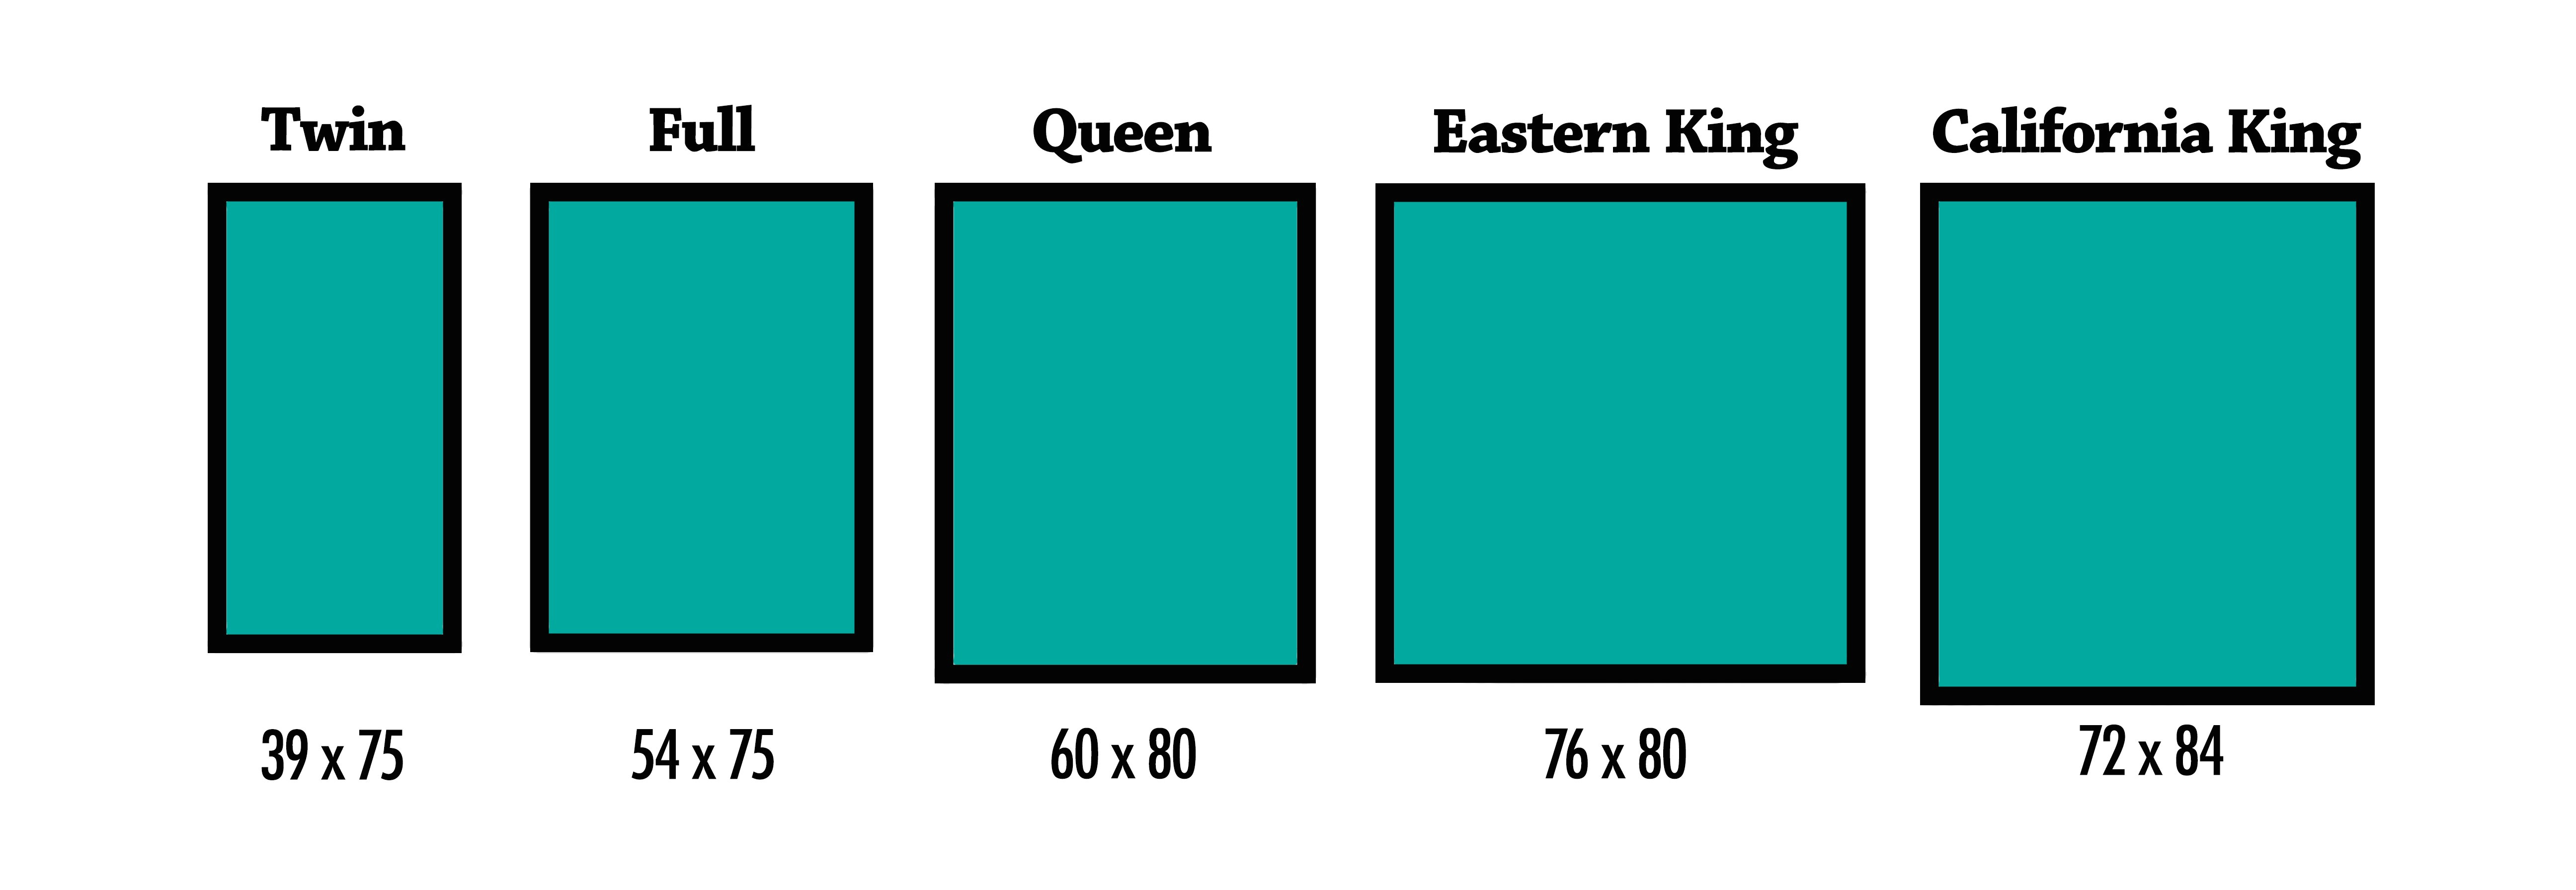 eastern king size mattress measurements